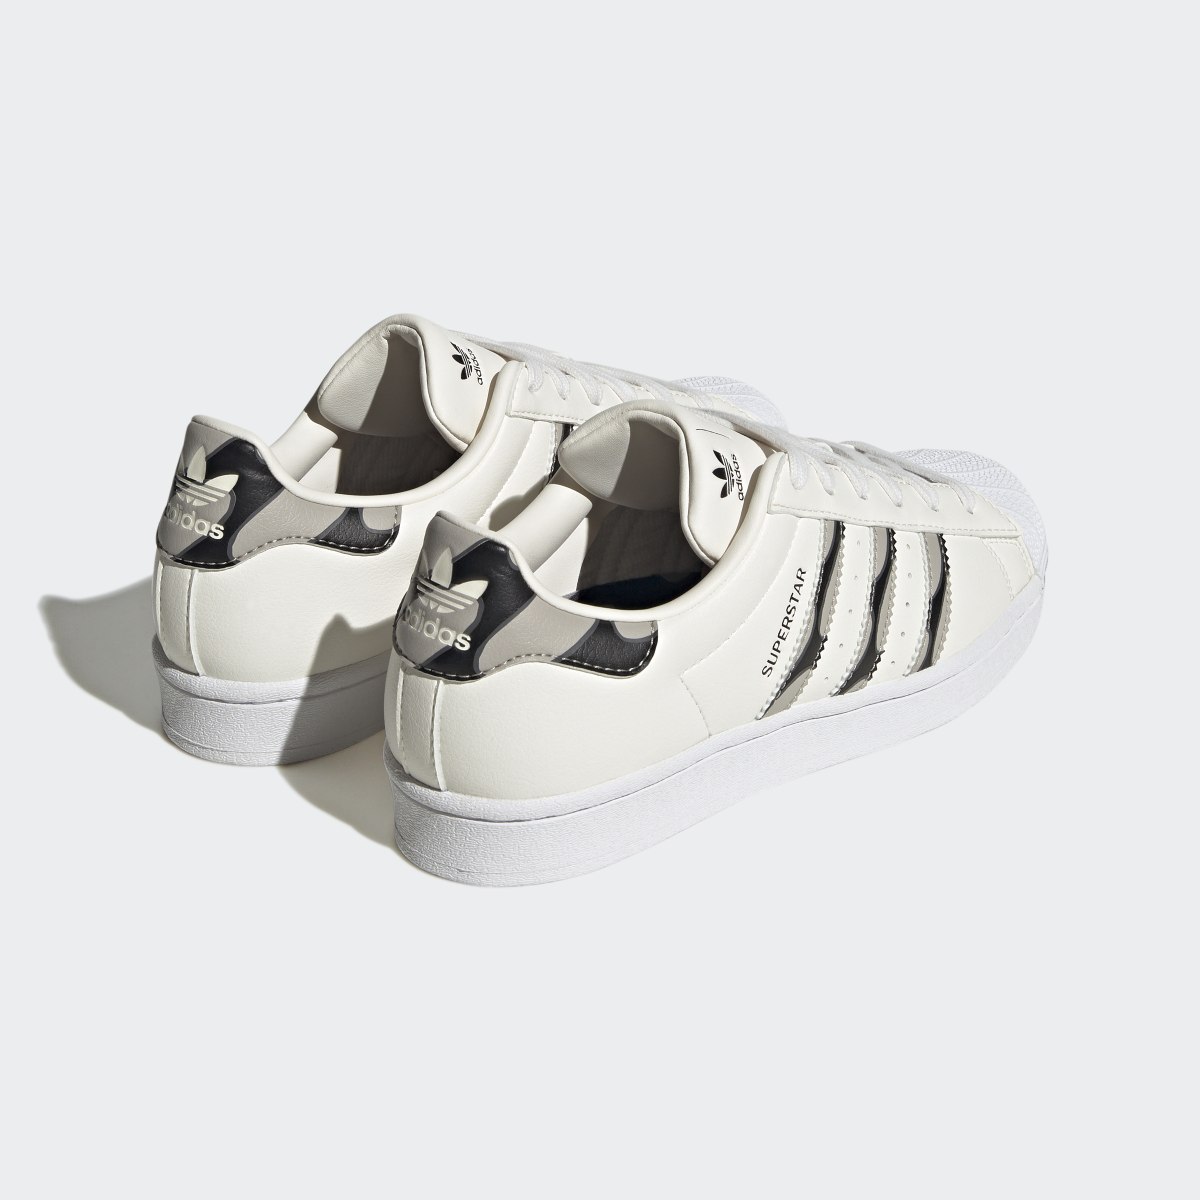 Adidas x Marimekko Superstar Schuh. 7